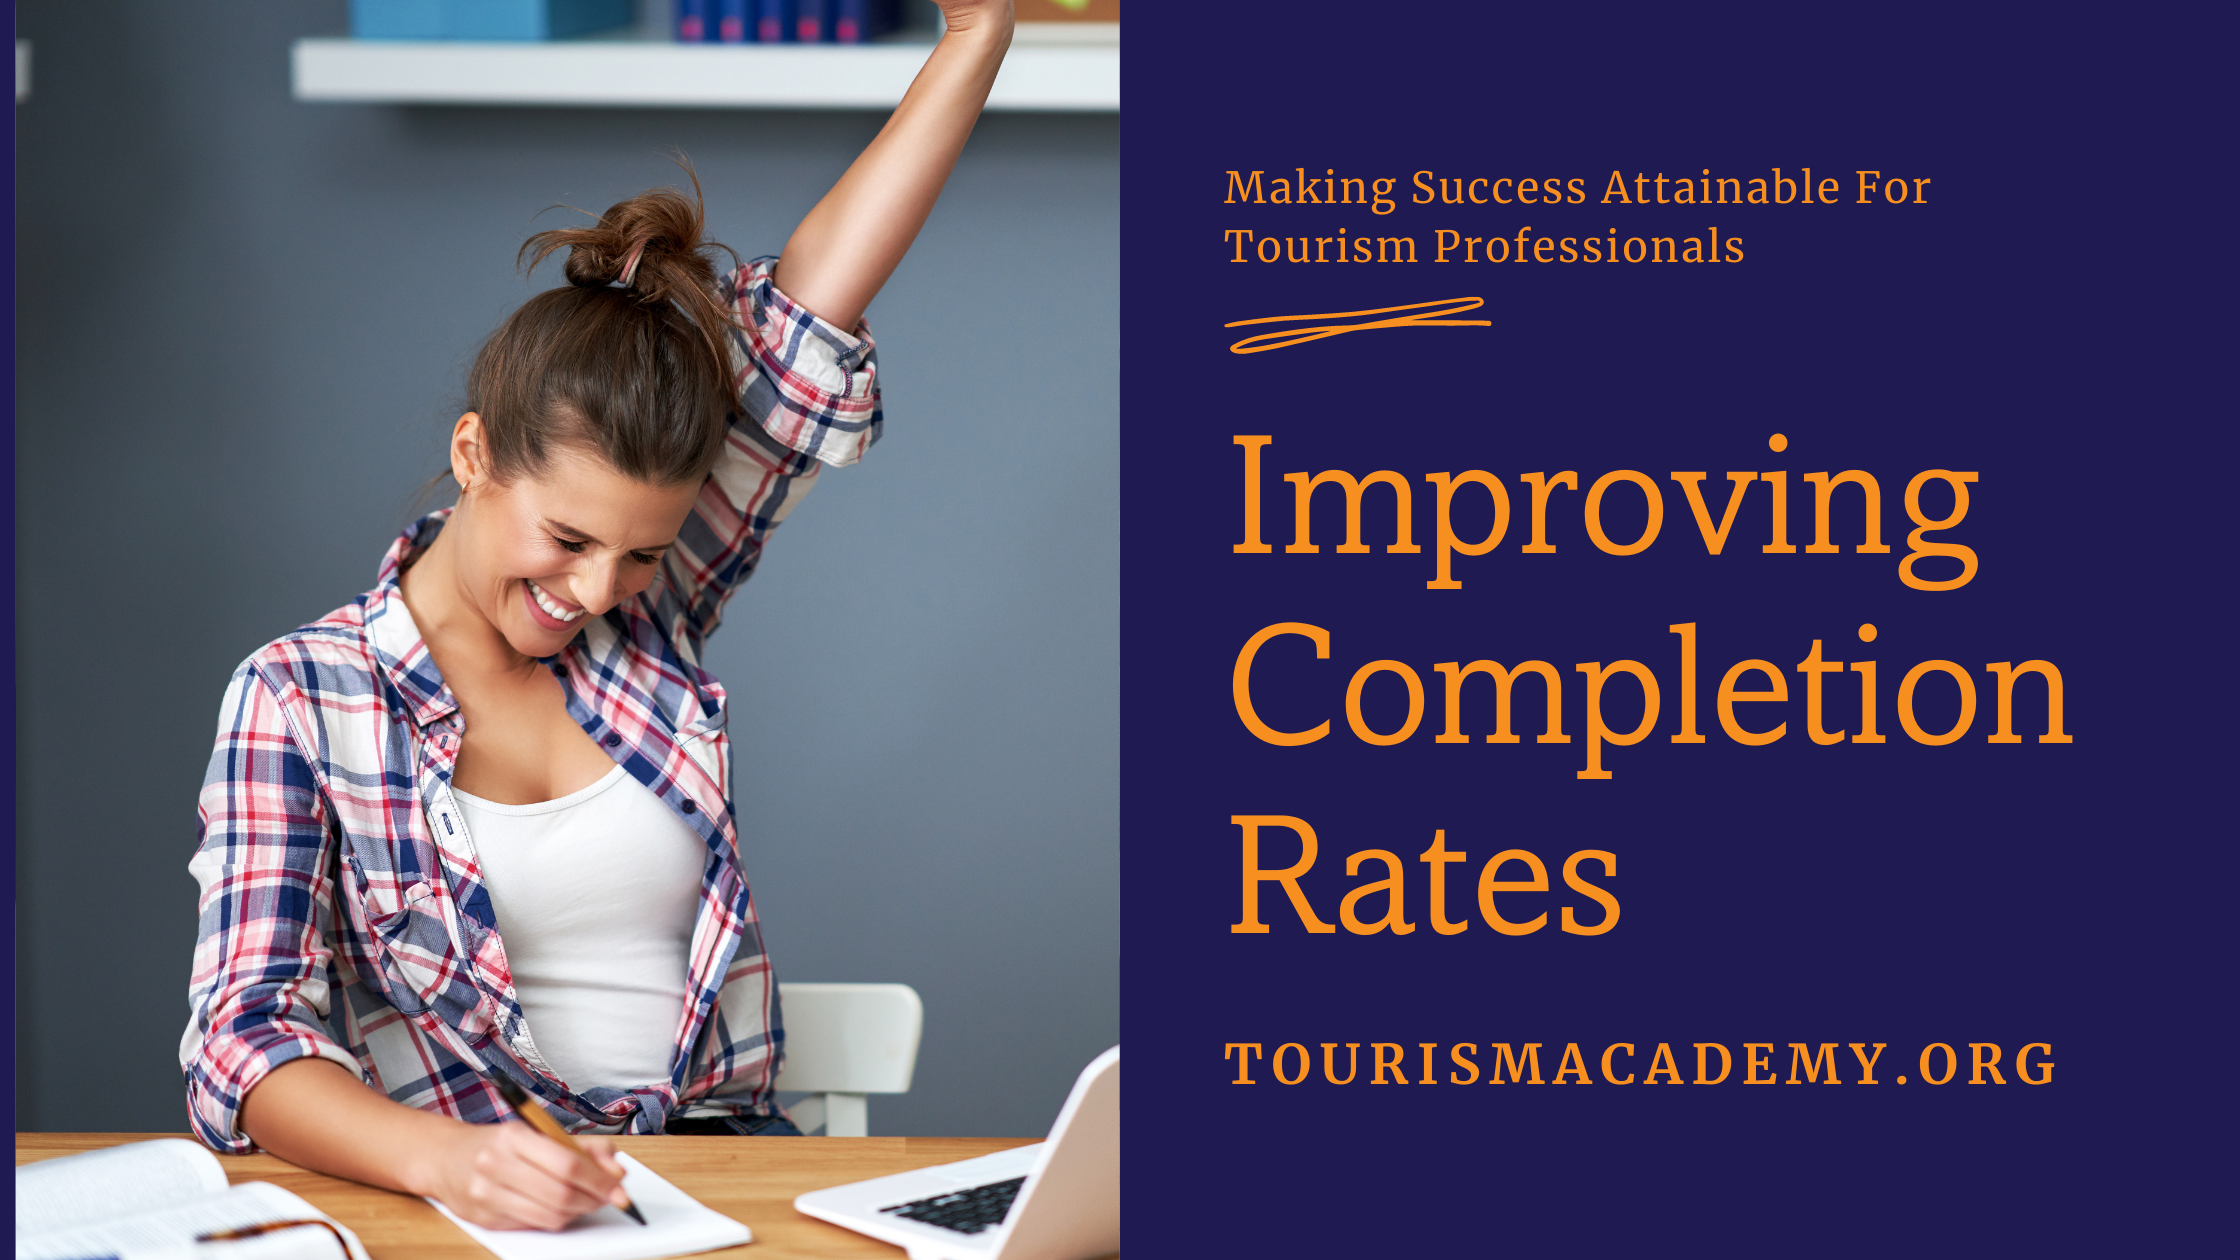 effective tourism training & education